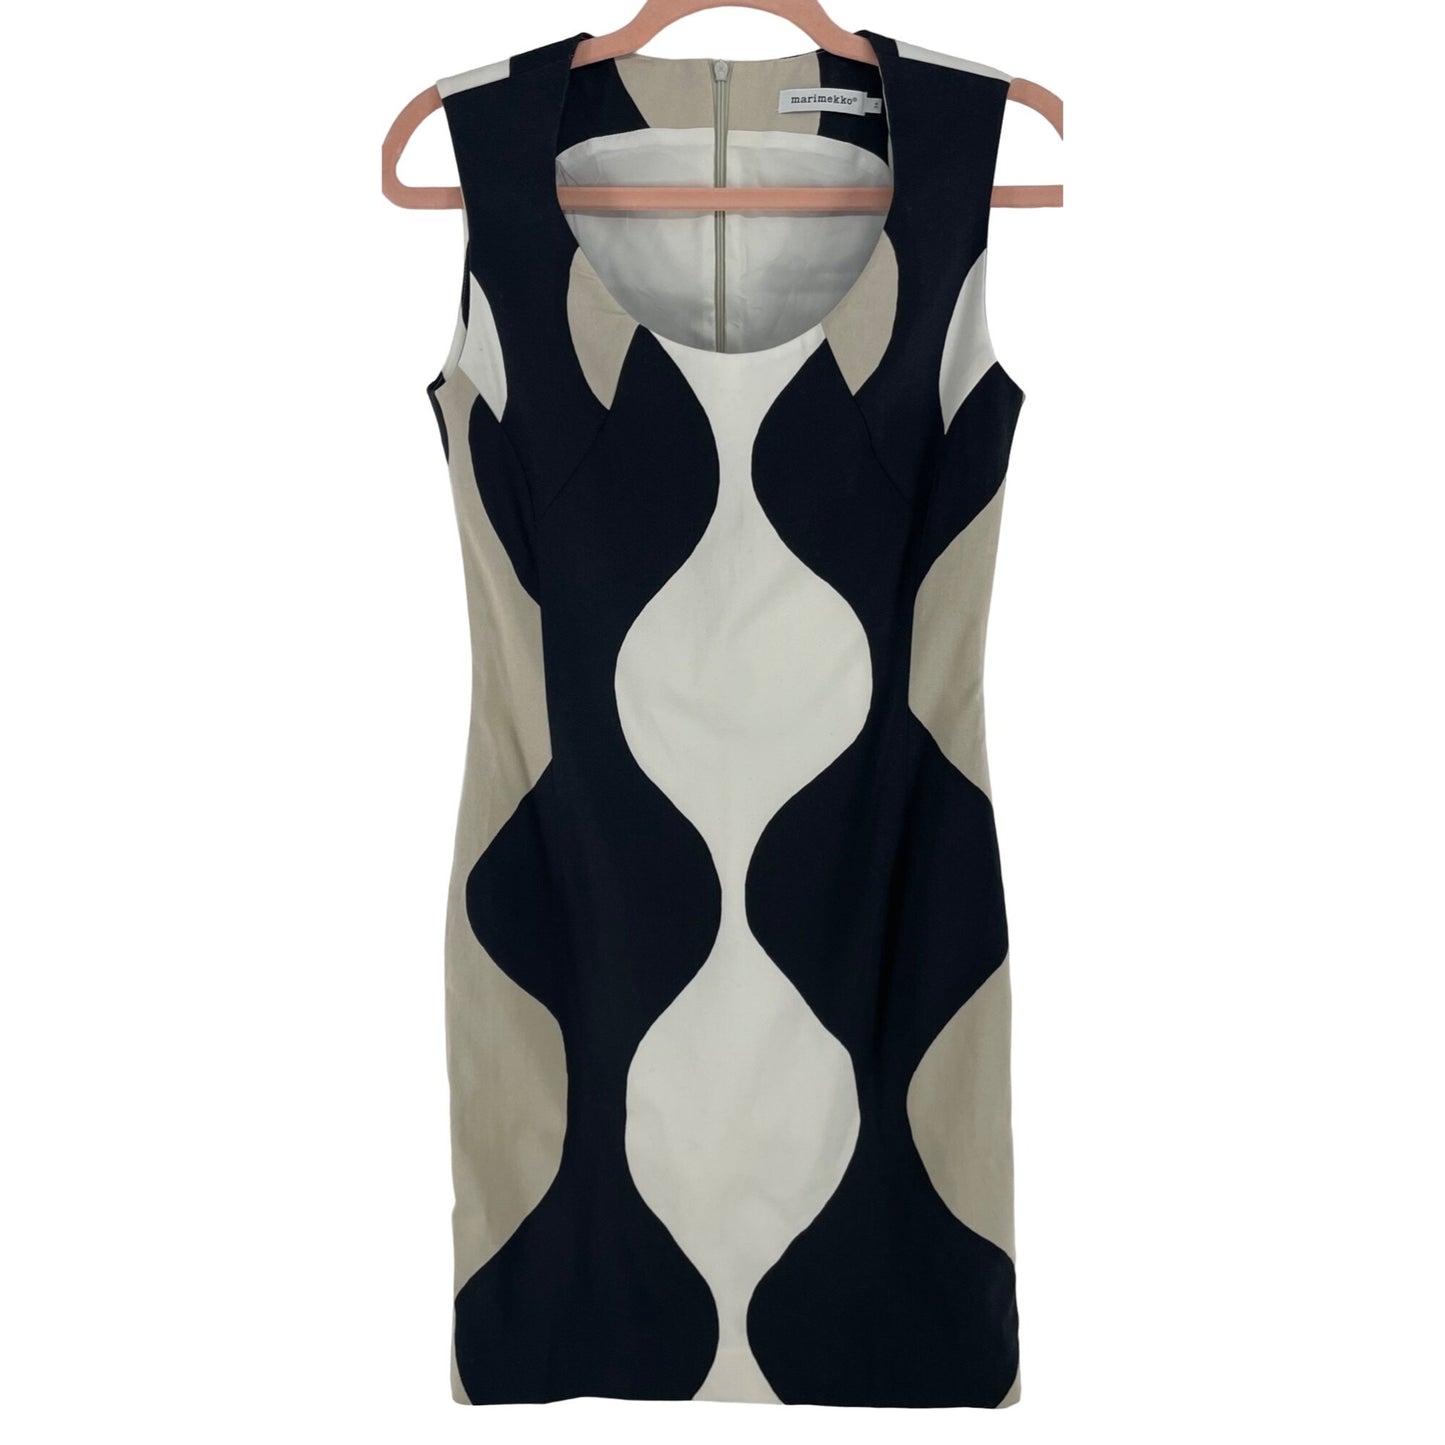 Marimekko Women's Size XS (34) Black, Tan & White Sleeveless Sheath Dress